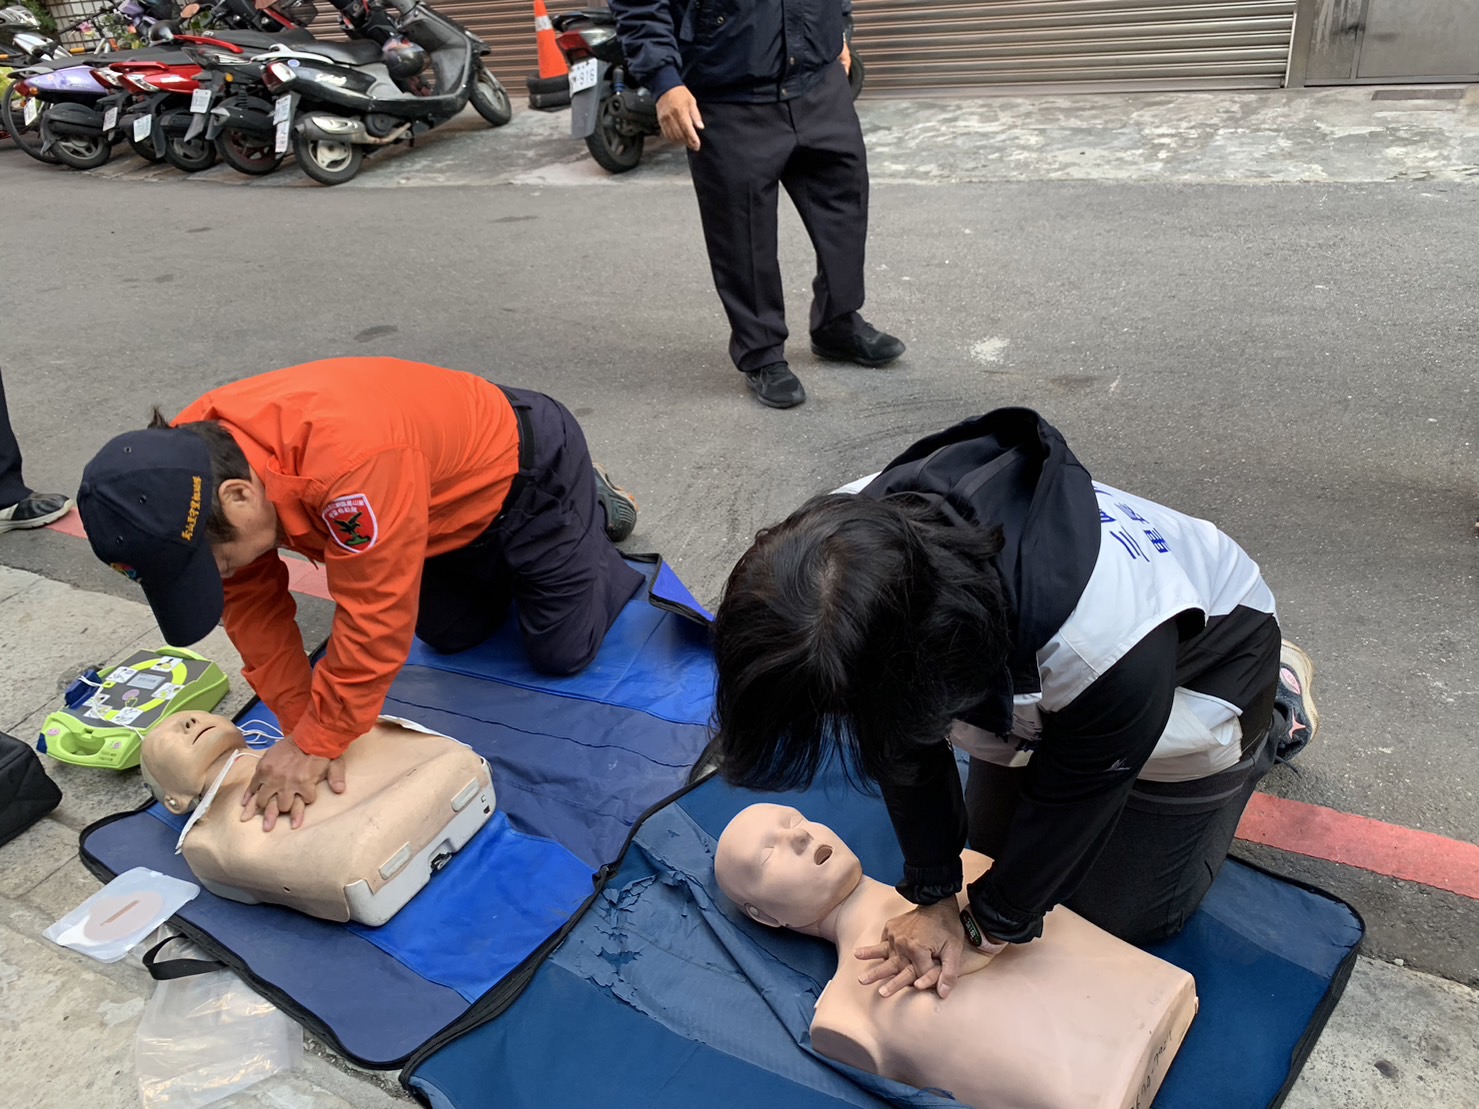 CPR操作